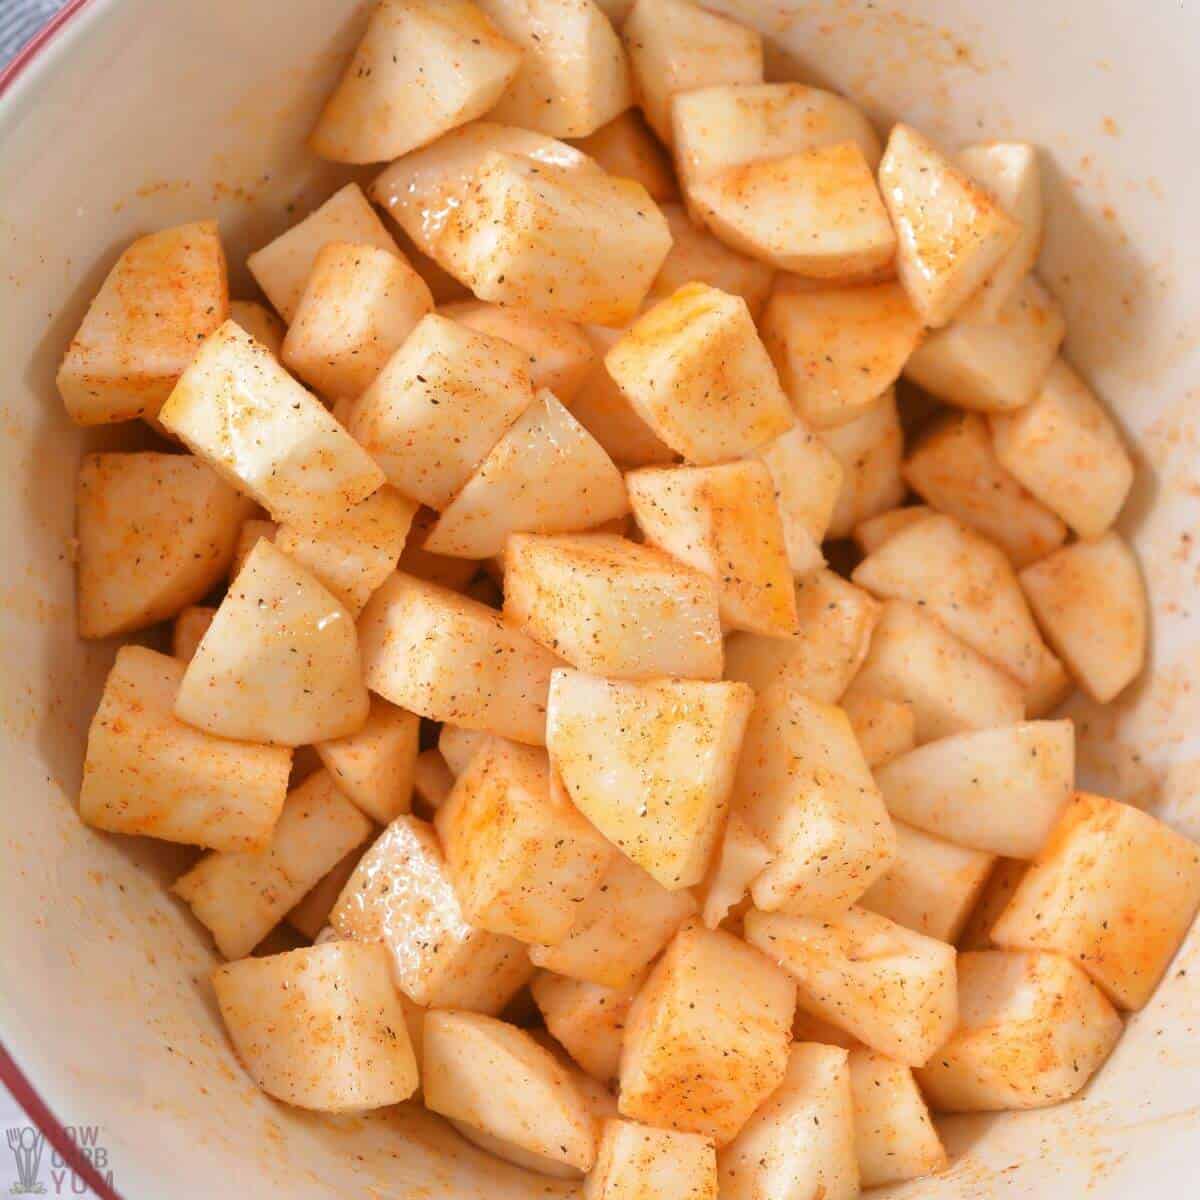 seasoned turnip cubes in mixing bowl.